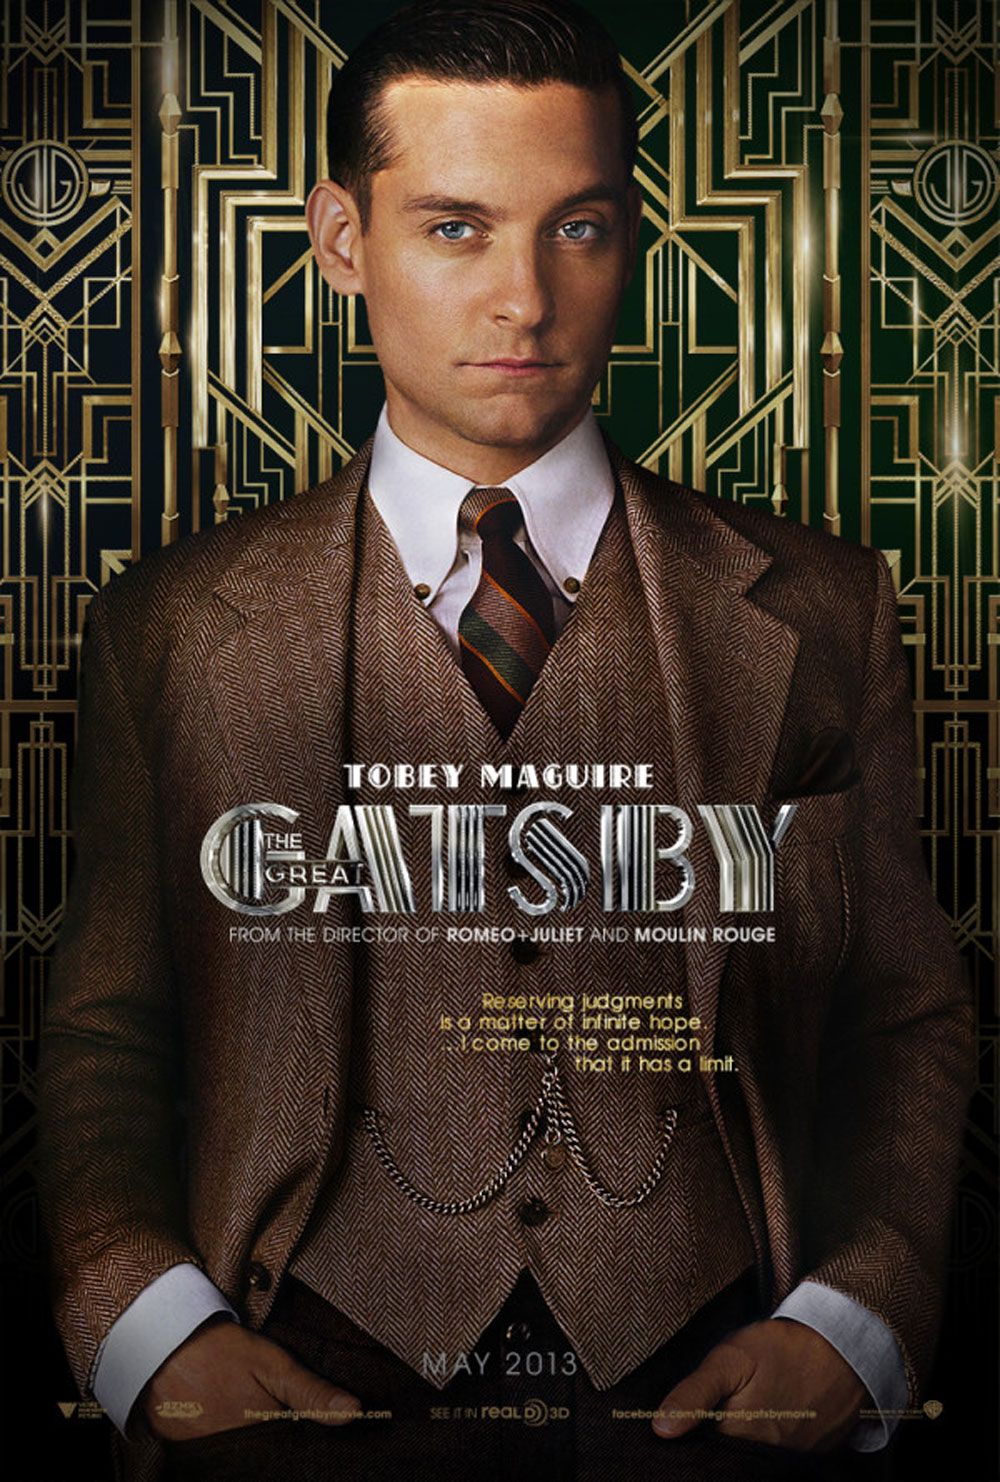 Free The Great Gatsby Poster Wallpaper | Wallpicshd